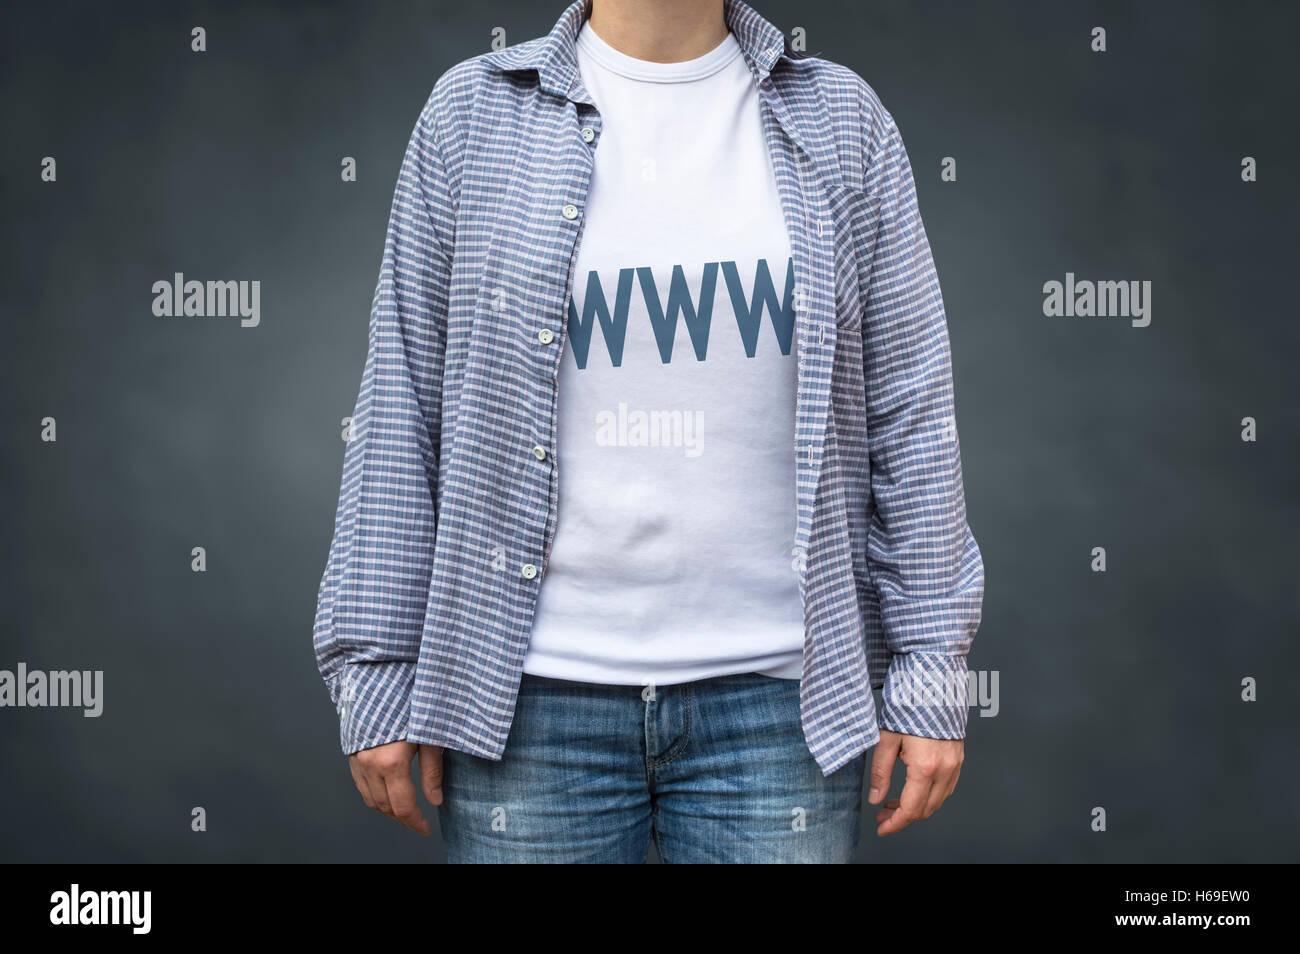 WWW internet surfer t-shirt. Fashion stylish print sport wear. Stock Photo